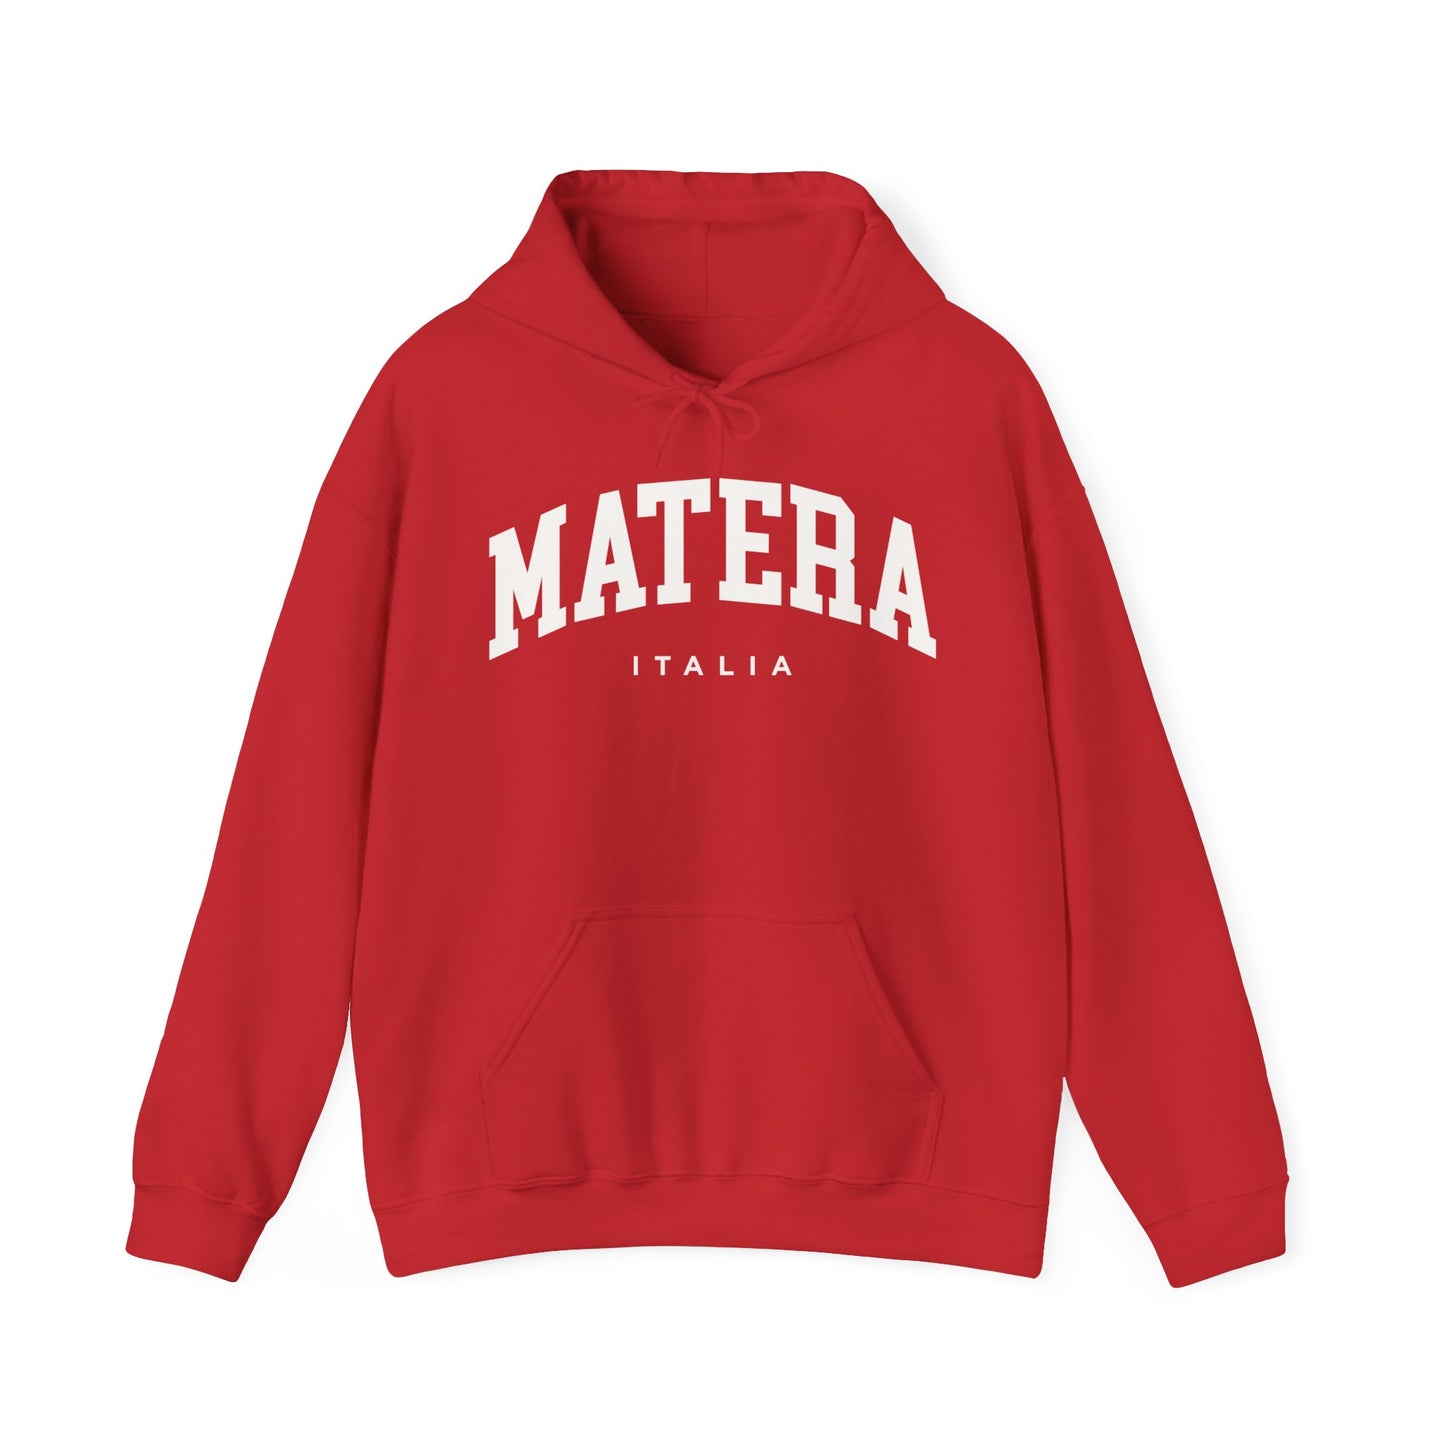 Matera Italy Hoodie